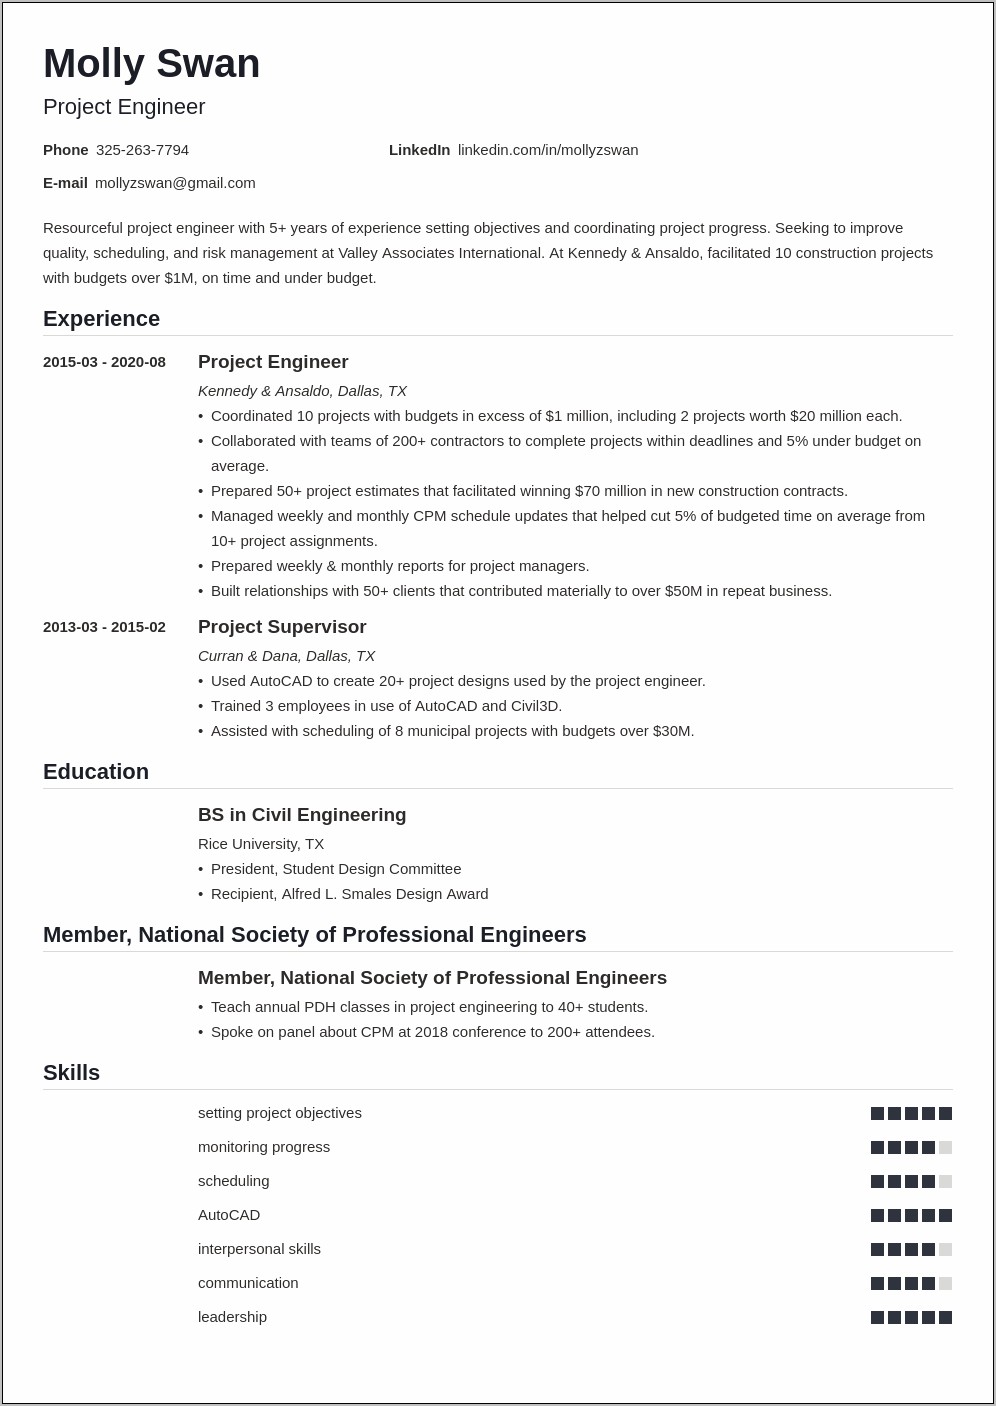 Best Portal To Post My Resume Engineering